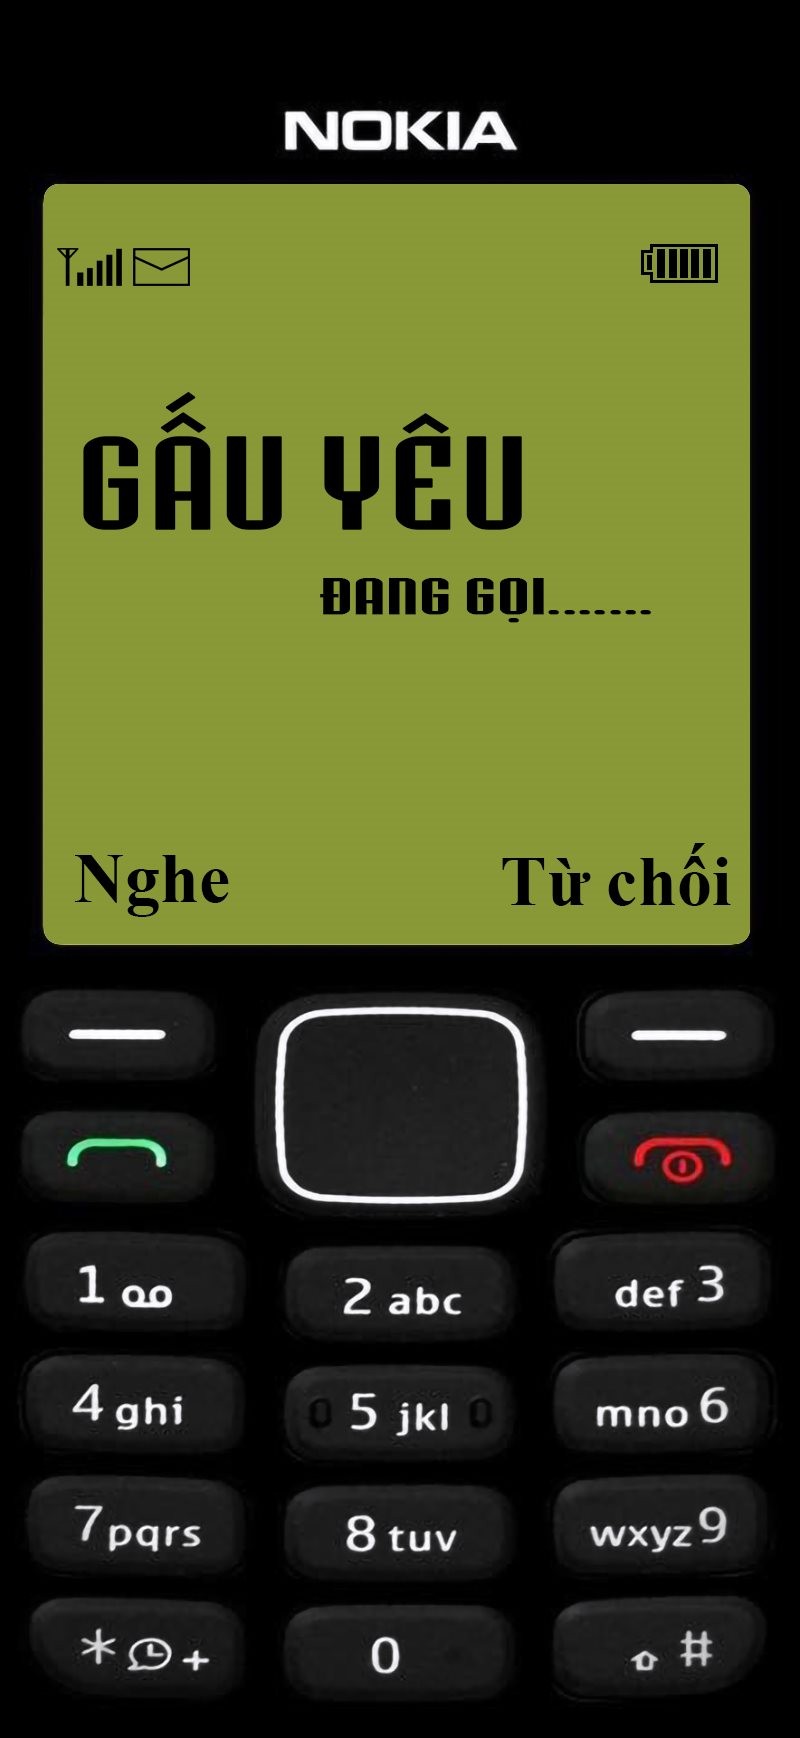 Tong hop hinh nen “cai trang” smartphone thanh Nokia 1280-Hinh-11